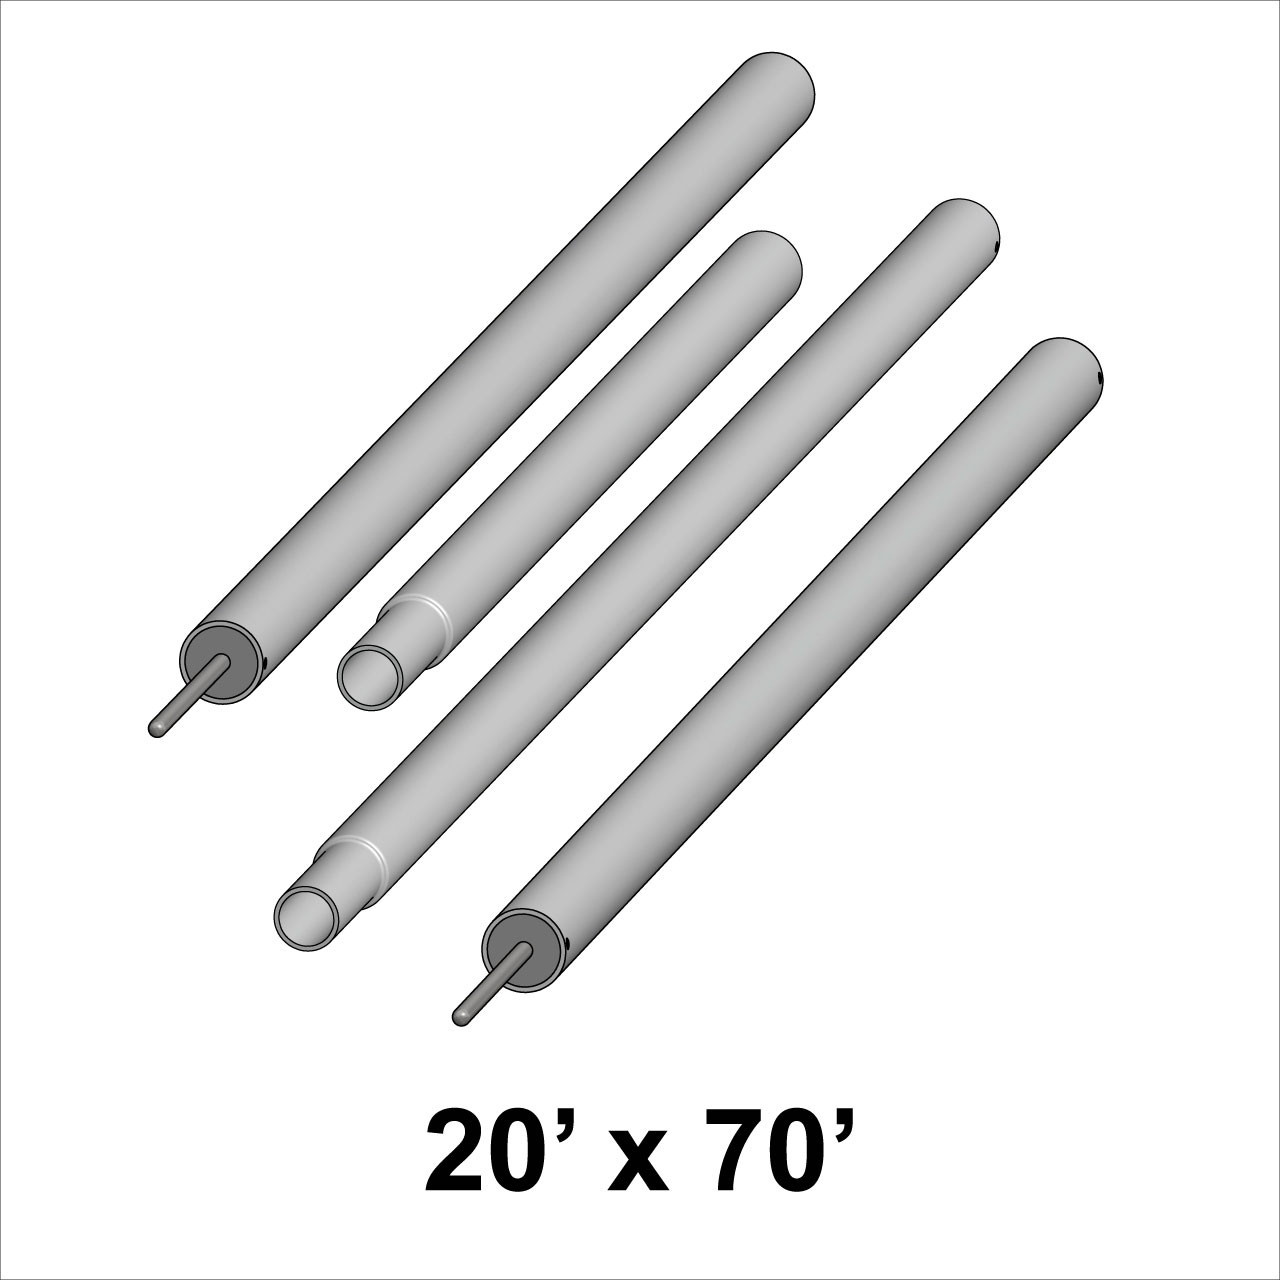 20' x 70' Classic Series Pole Kit